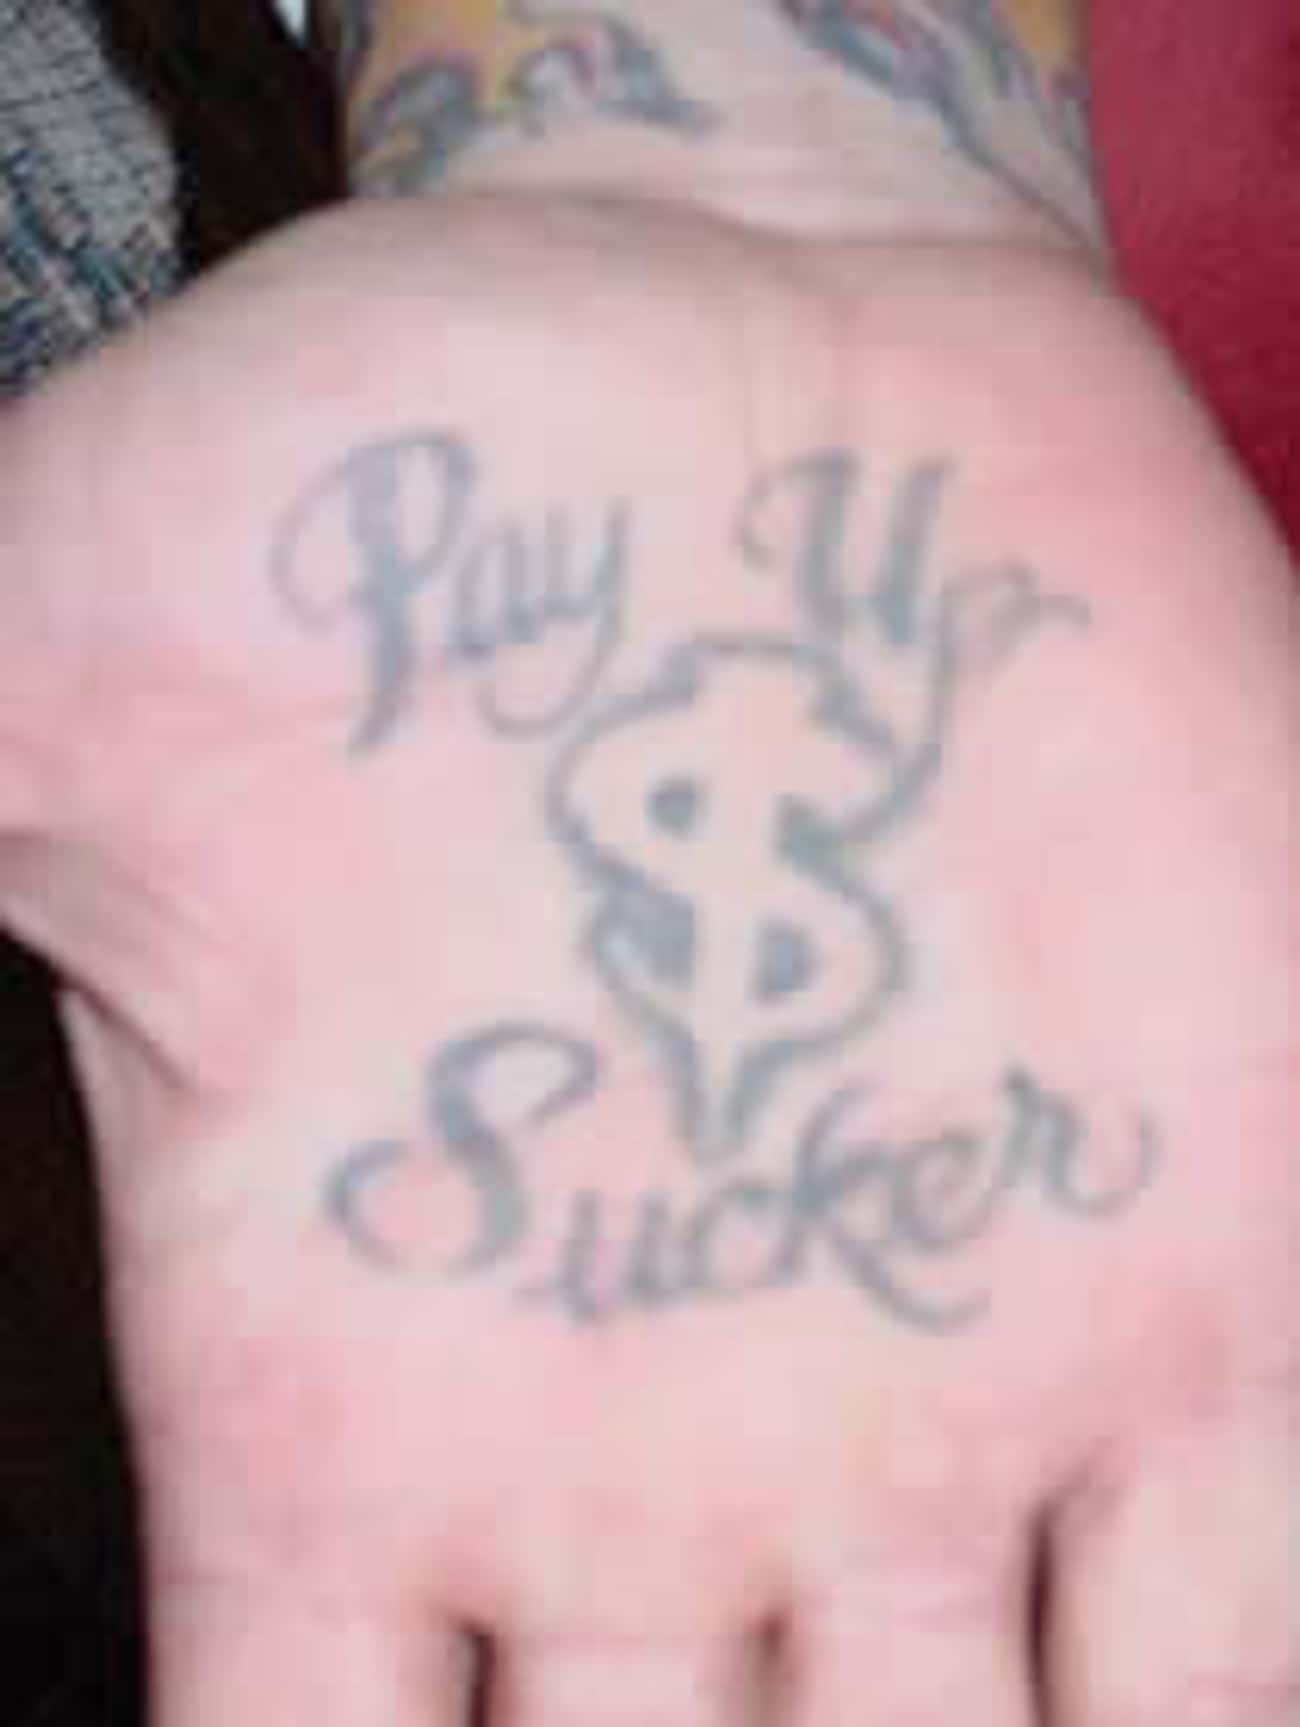 Pay Up Sucker